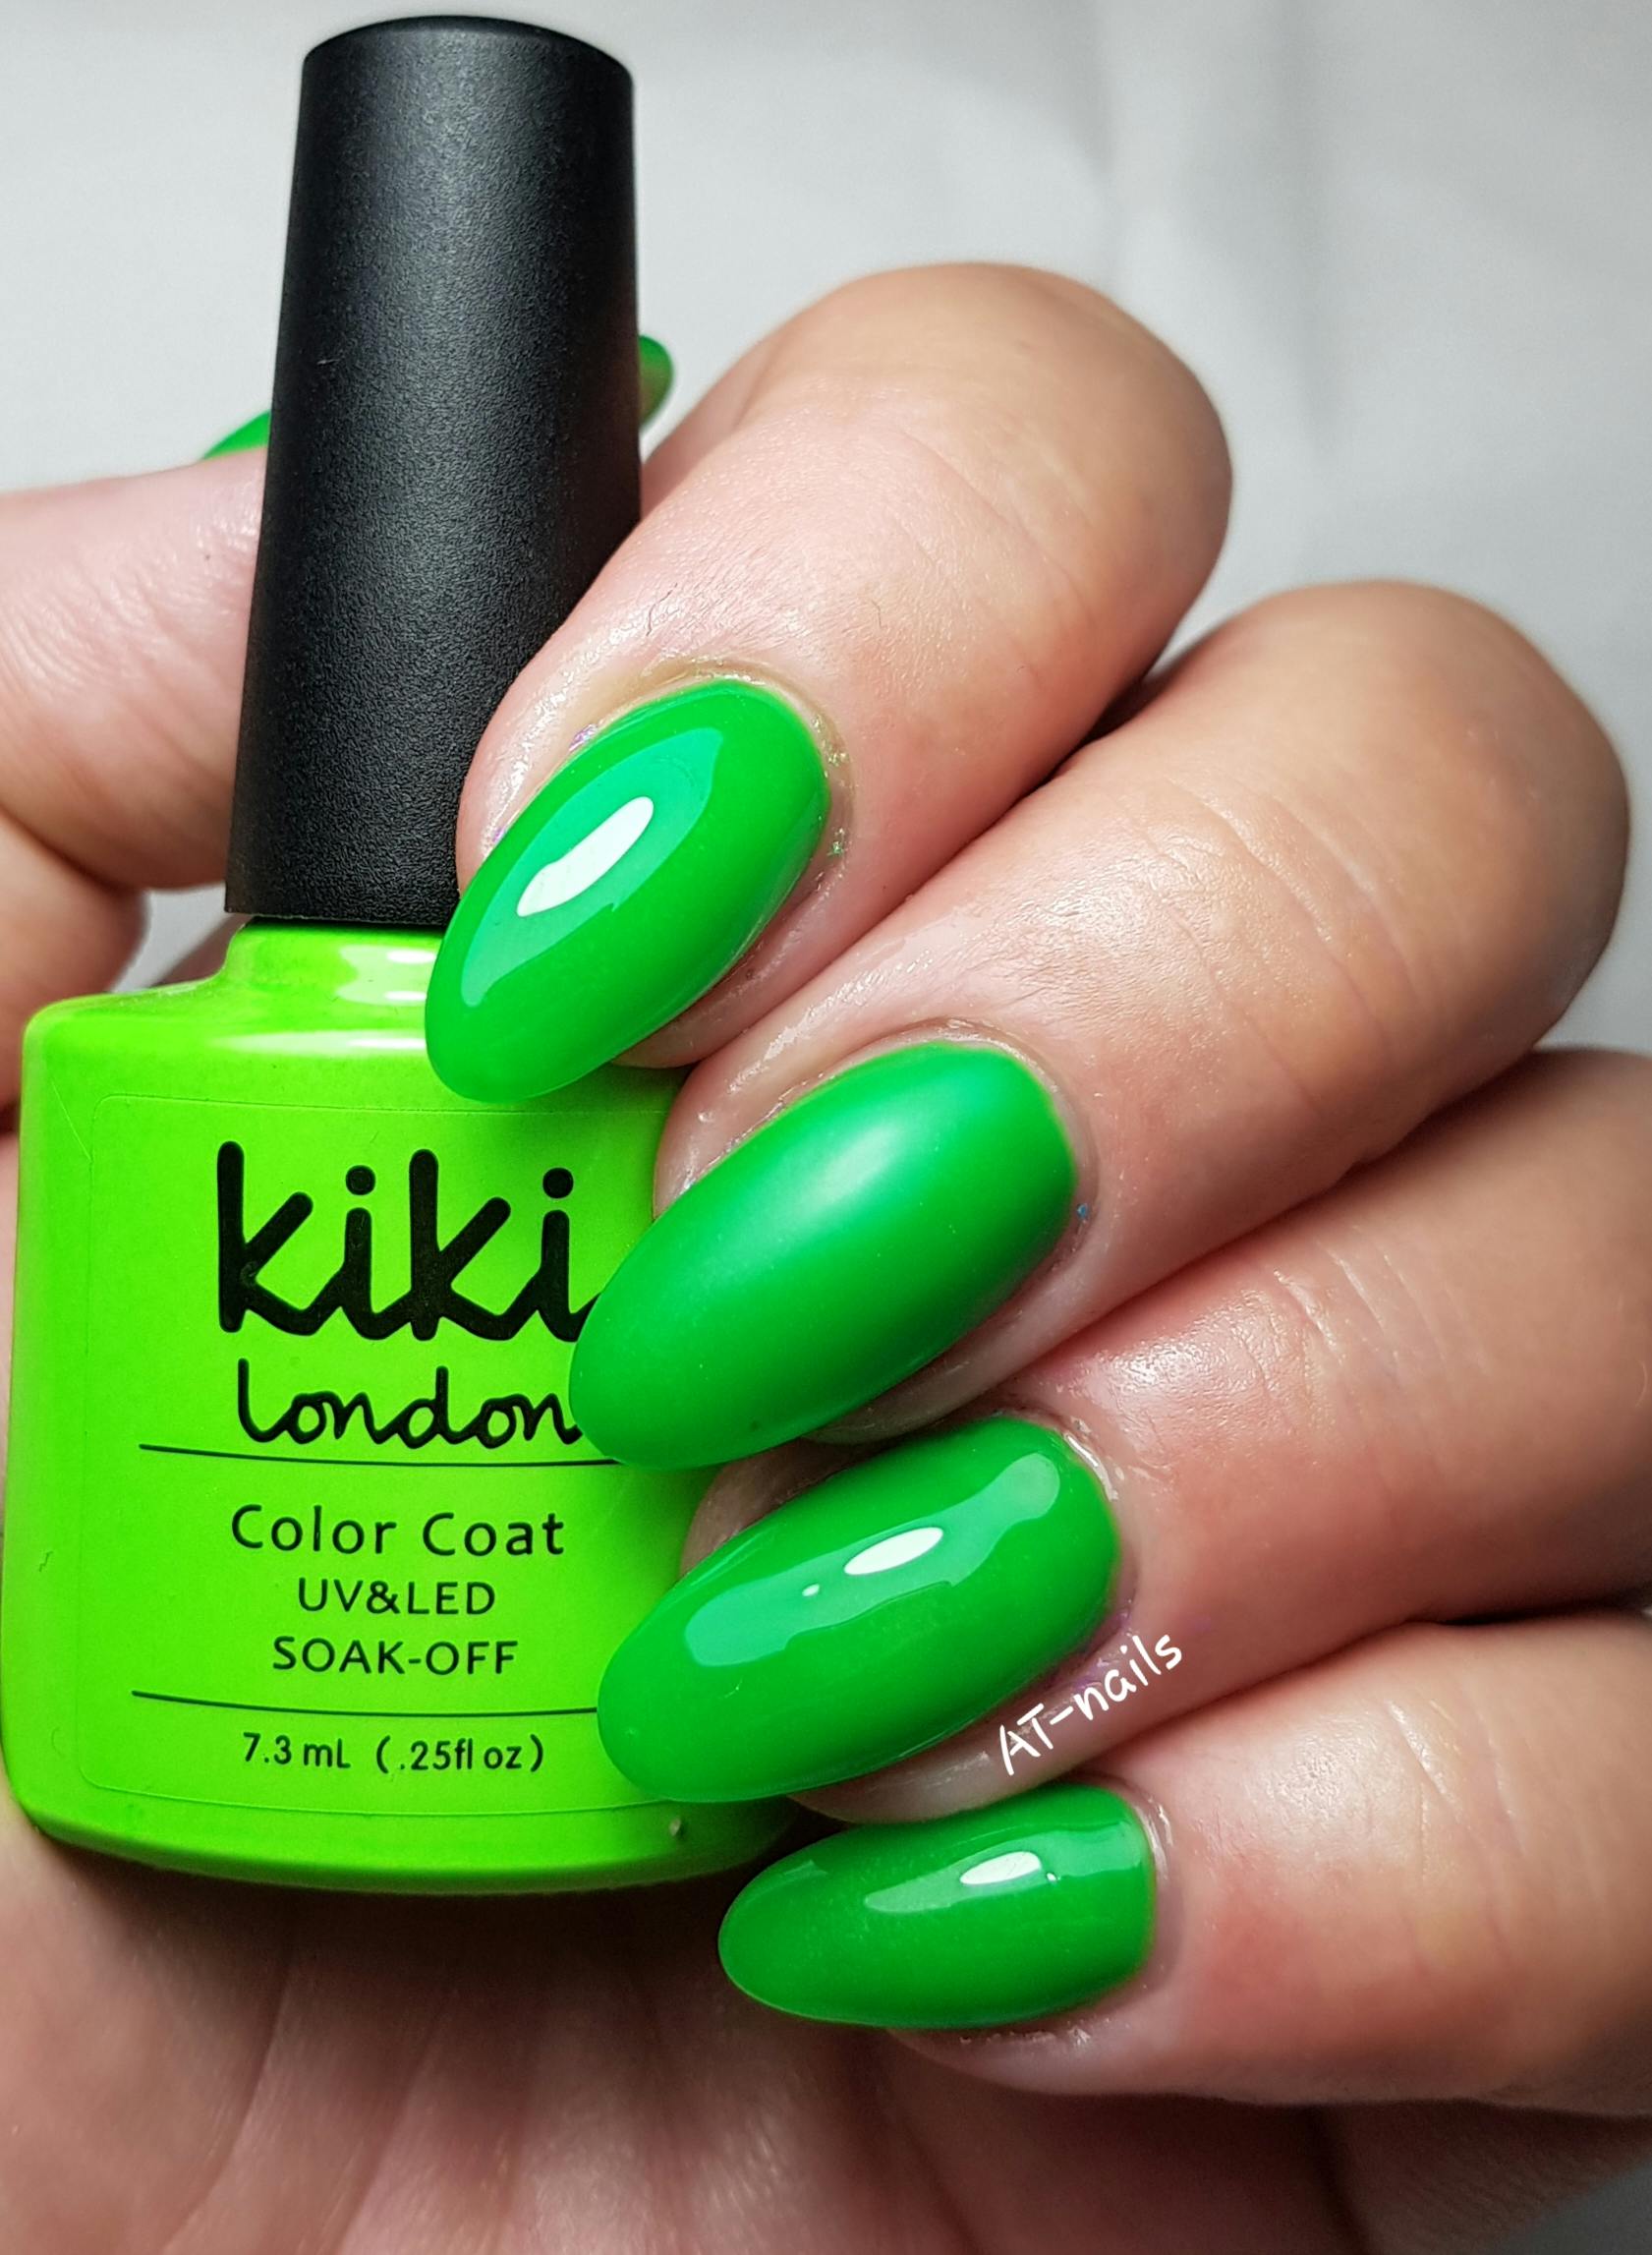 On My Nails: China Glaze Lime After Lime - myfindsonline.com